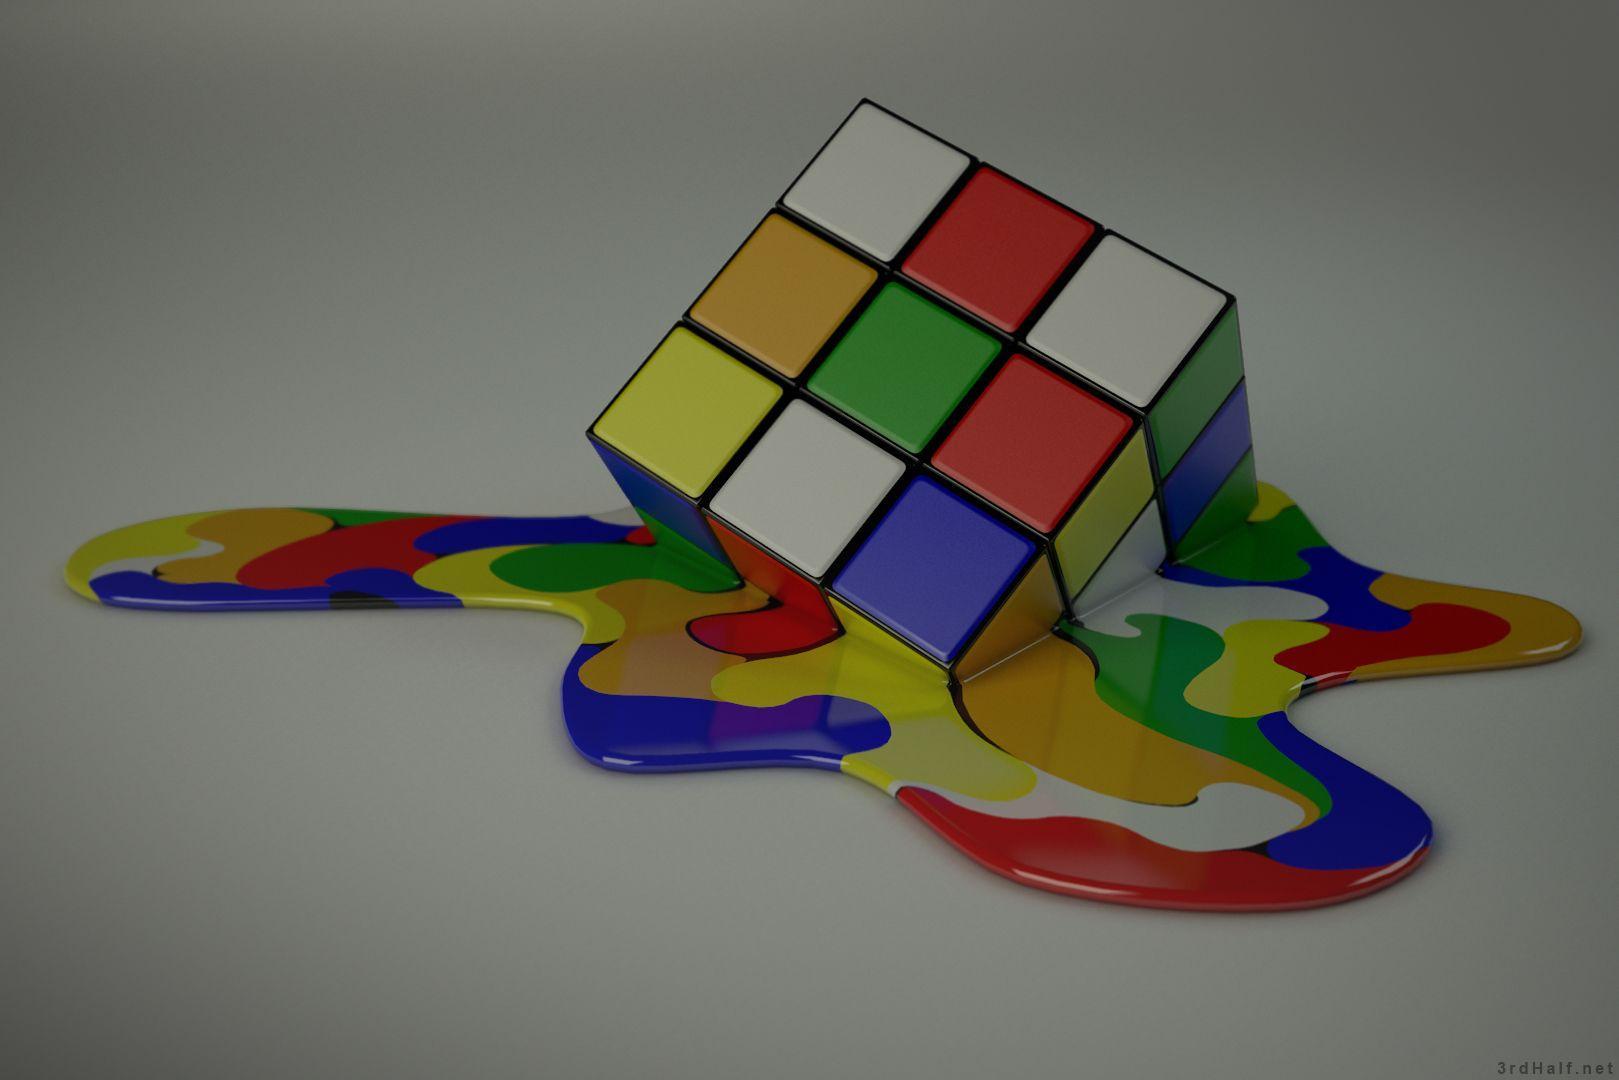 Rubik's Cube Wallpaper HD for Desktop Background. iPhone. iPad